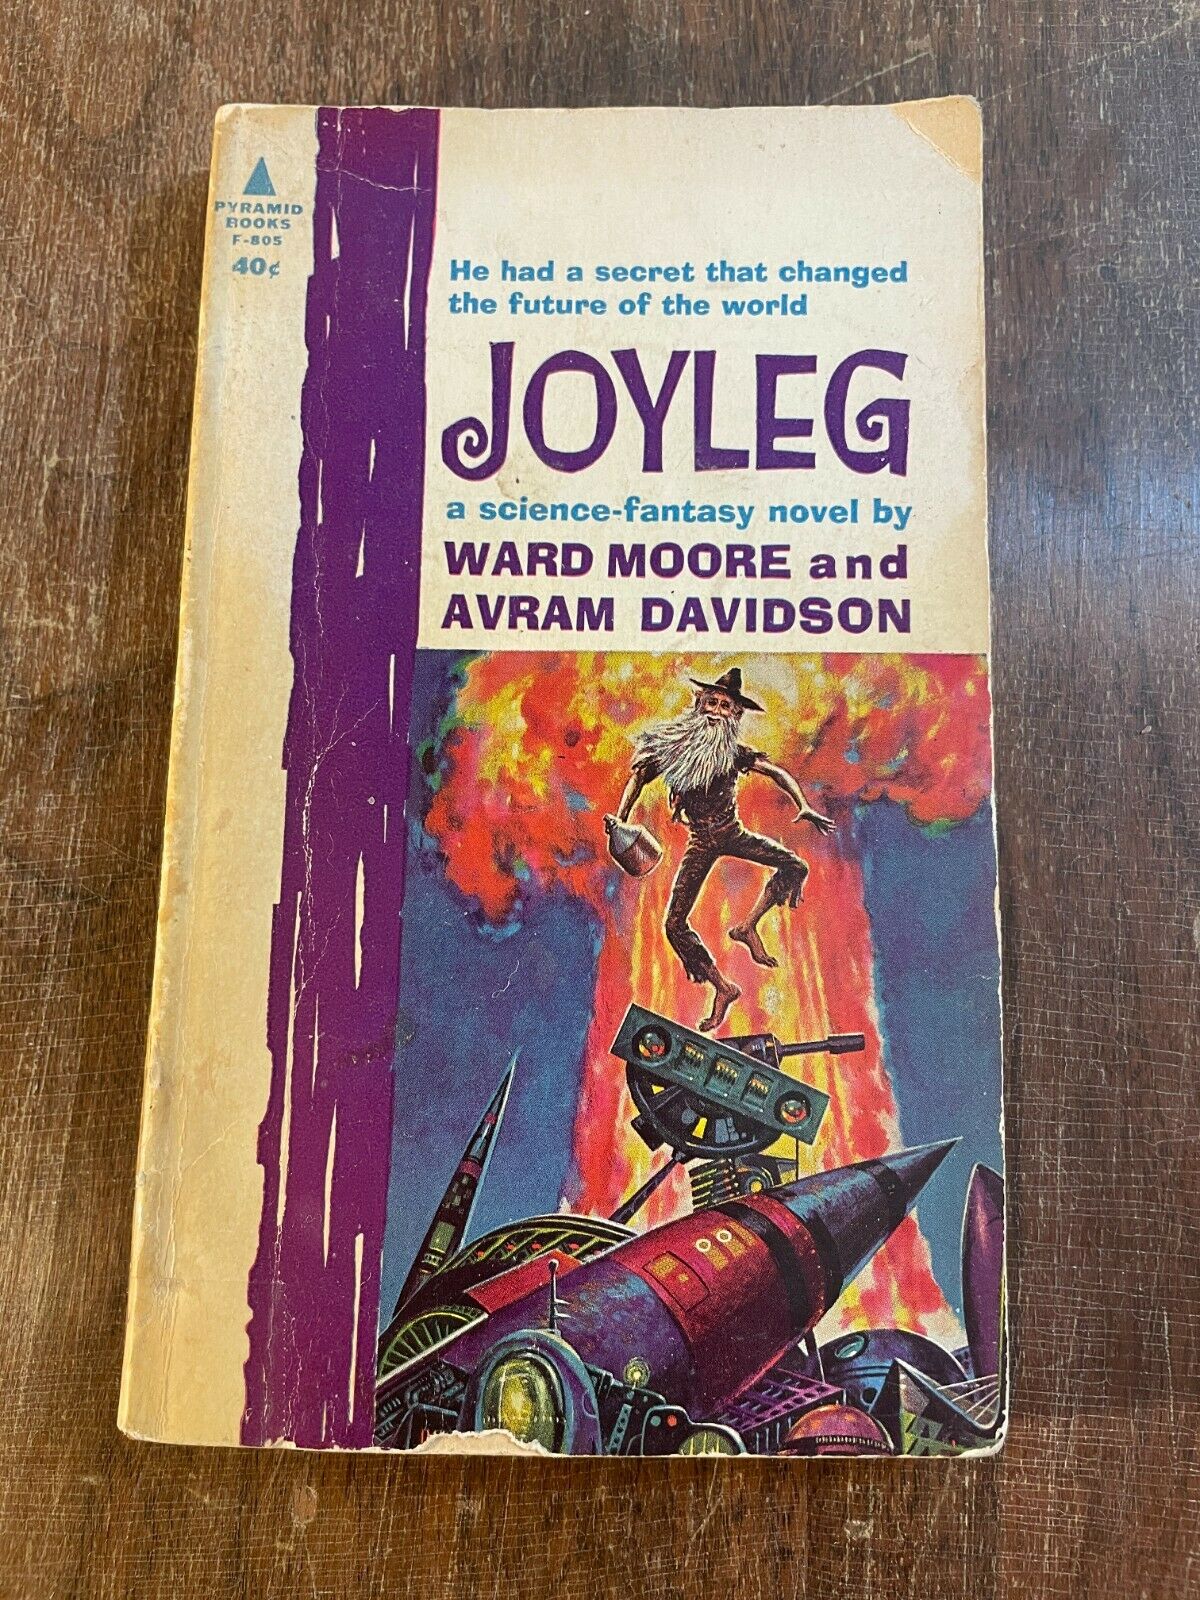 Joyleg - Ward Moore and Avram Davidson - 1962 Pyramid Books - (Q1)